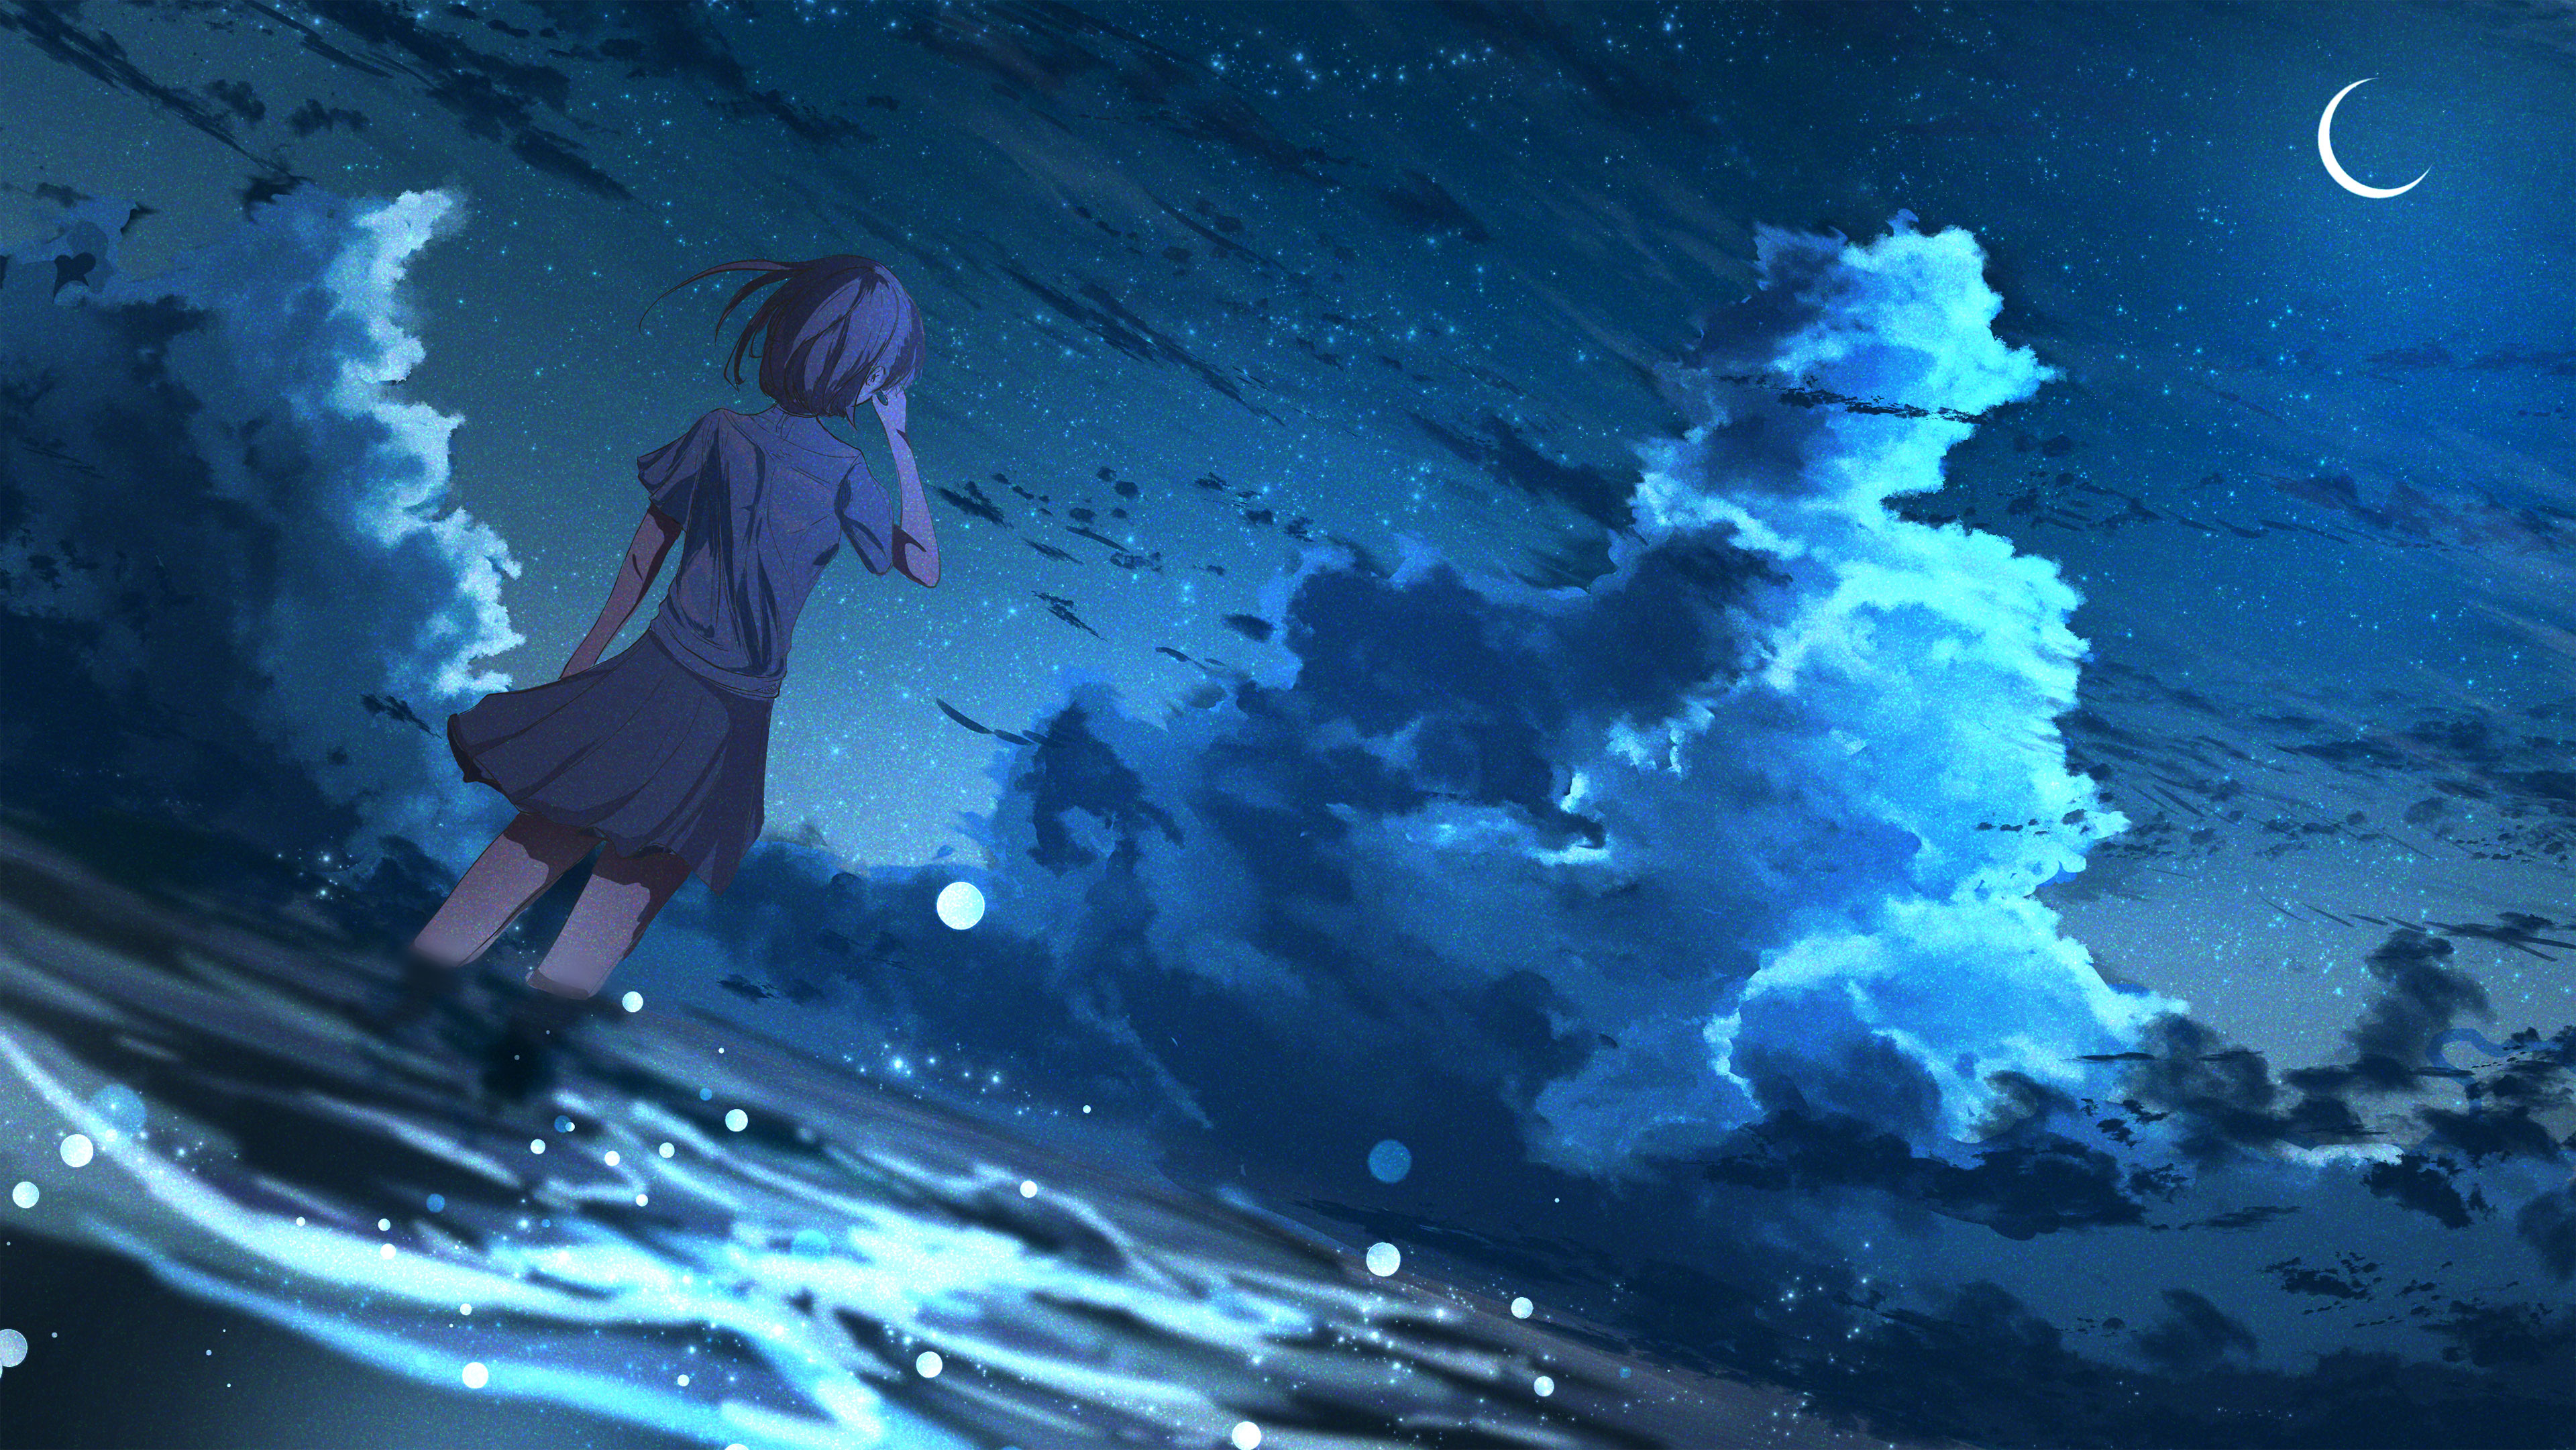 Anime Girl in Half Moon Night 4K Wallpaper, HD Anime 4K Wallpapers